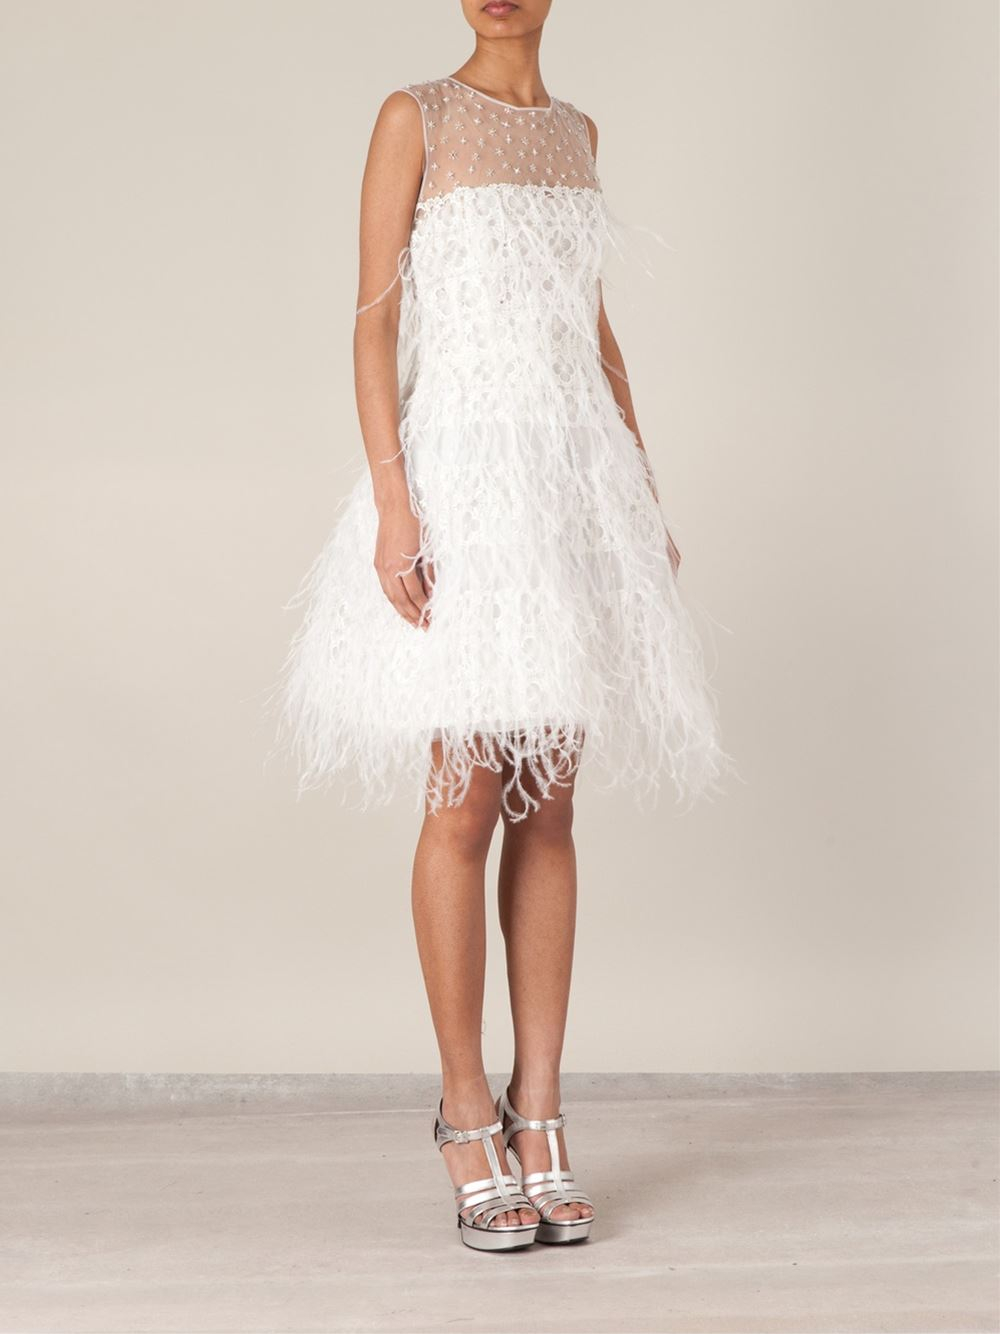 Lyst - Oscar De La Renta Ostrich Feather Embroidered Dress in White